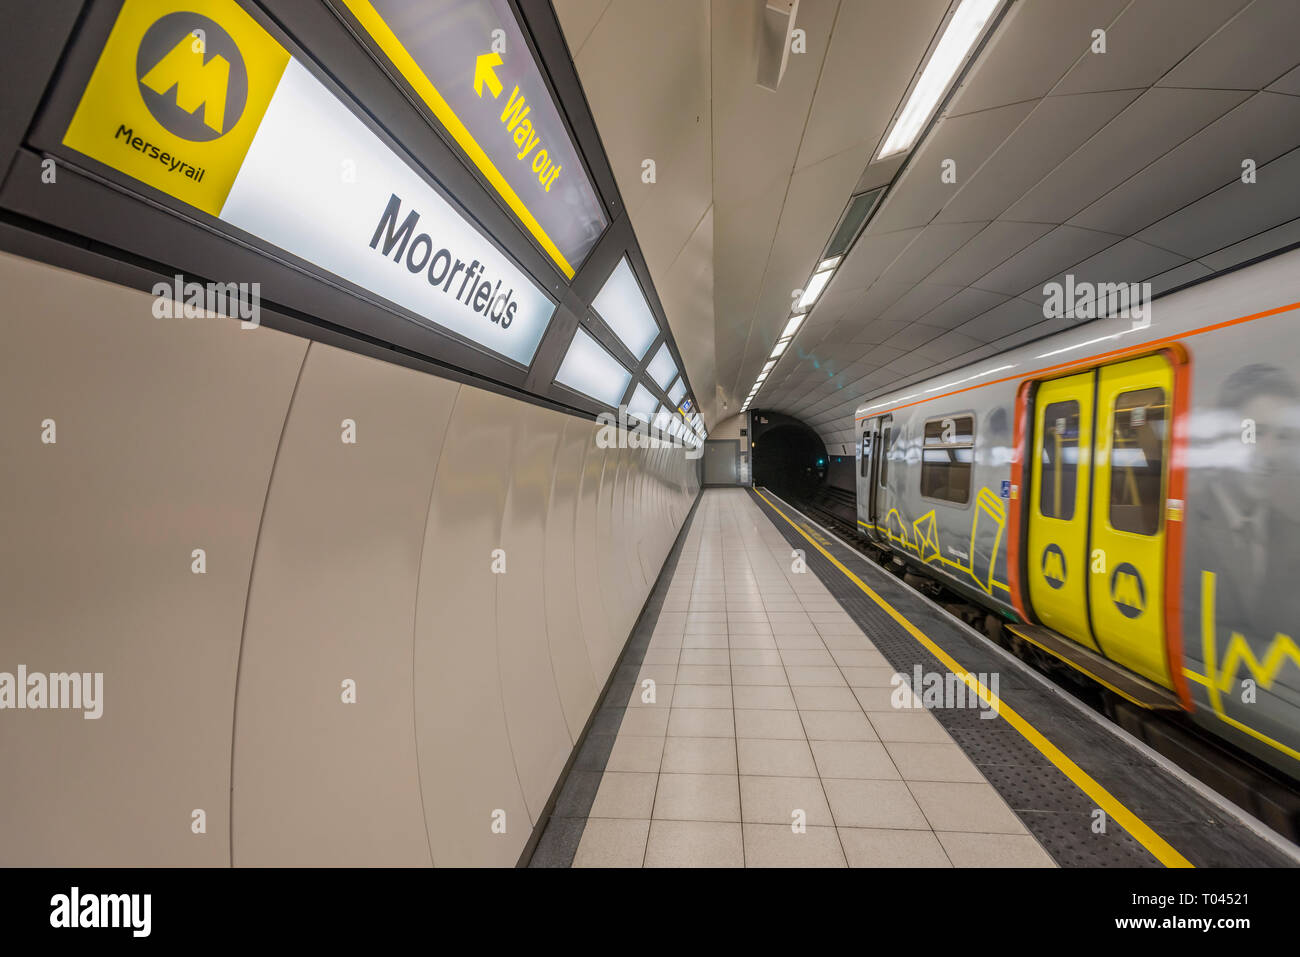 Moorfields platform. Merseyrail Liverpool Stock Photo